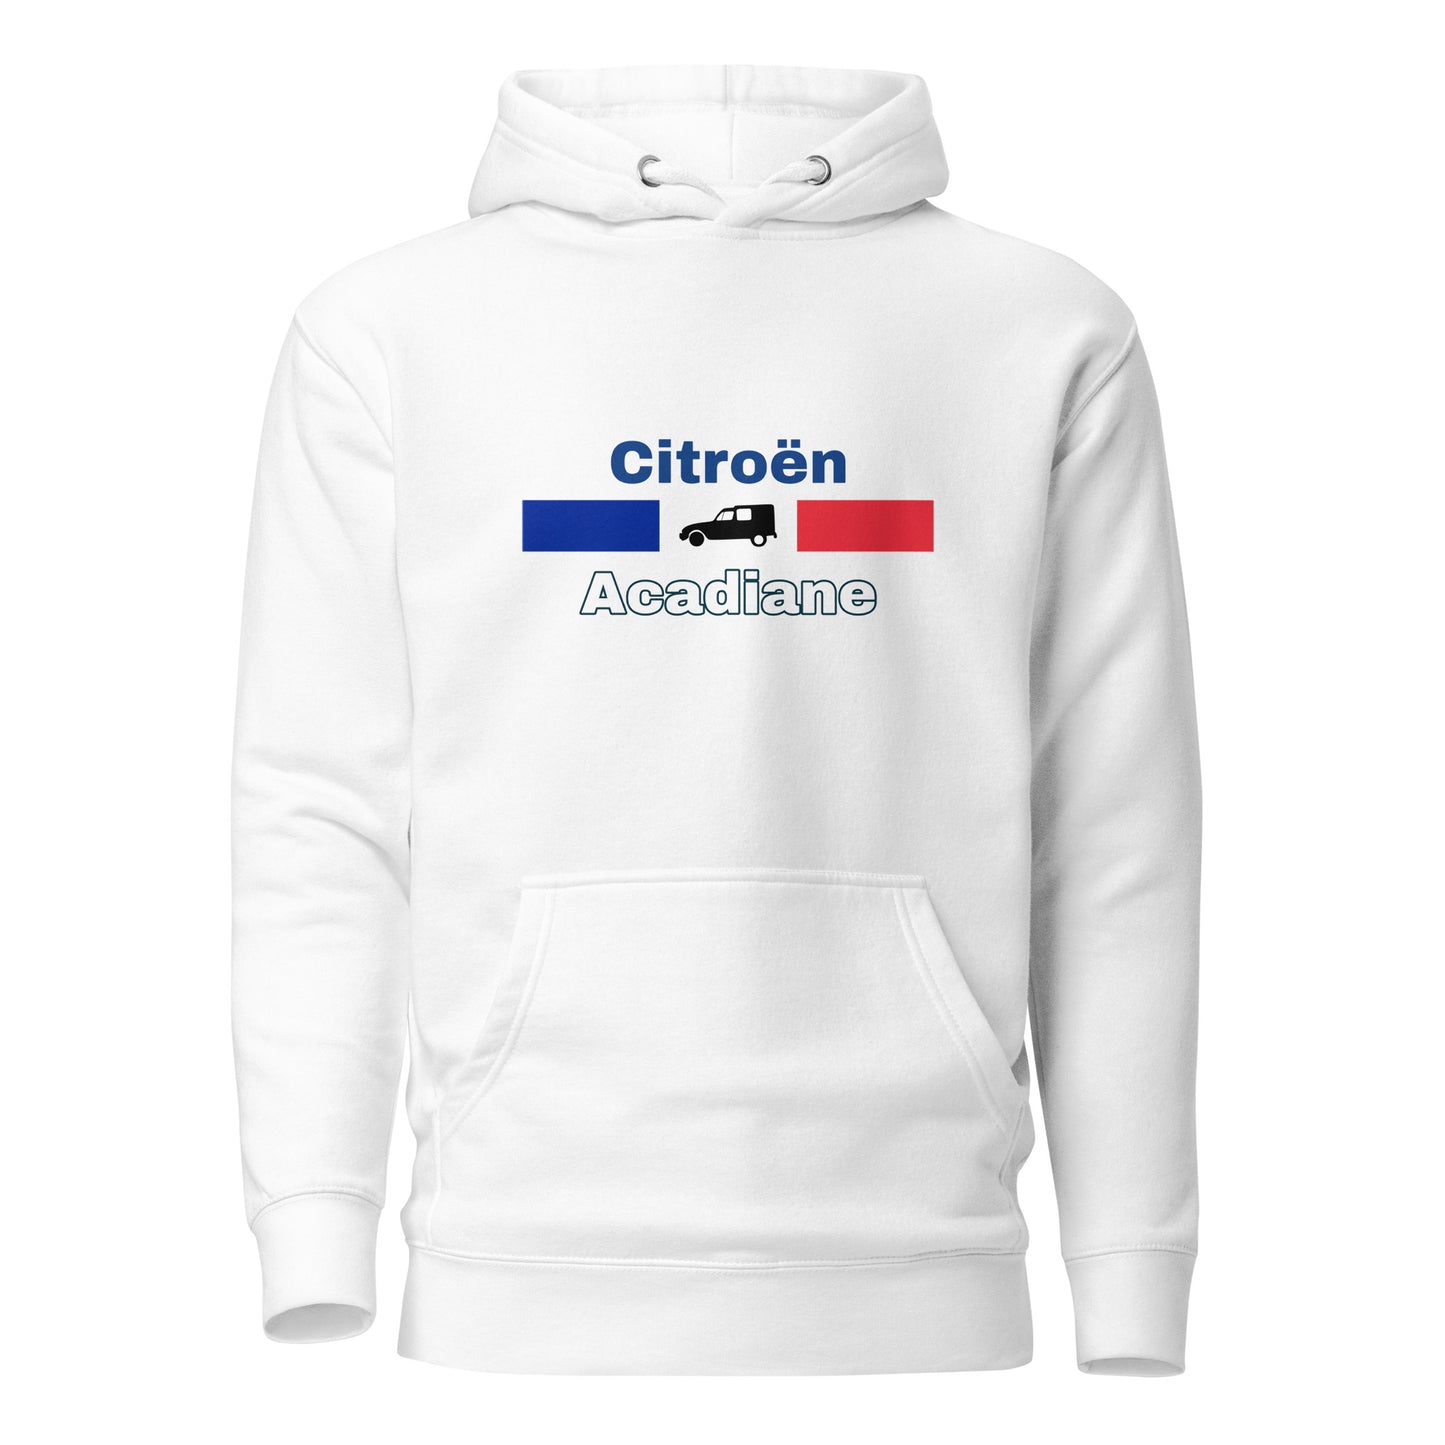 France Citroën Acadiane hoodie Premium uniseks - Navy, Grijs of Wit